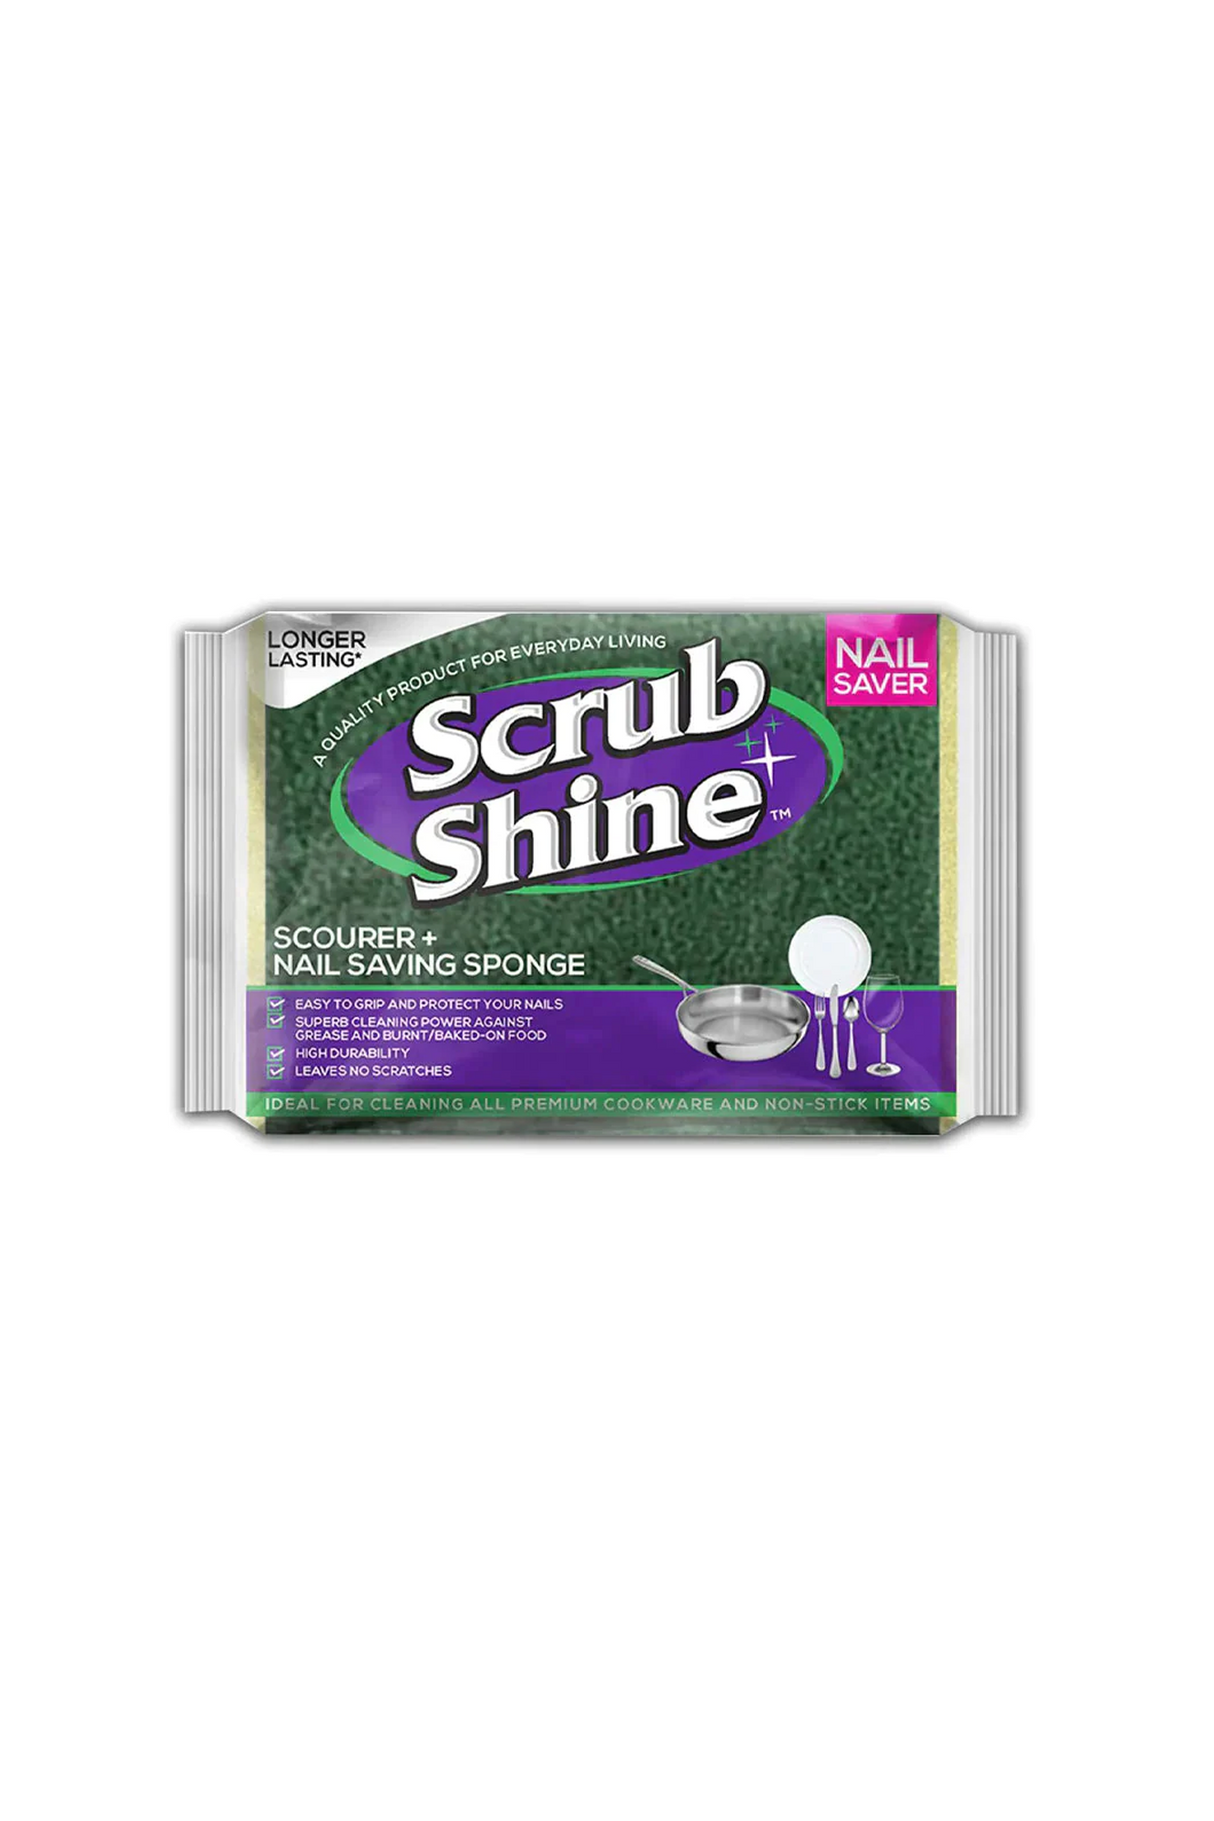 scrub shine sponge scourer nail saving